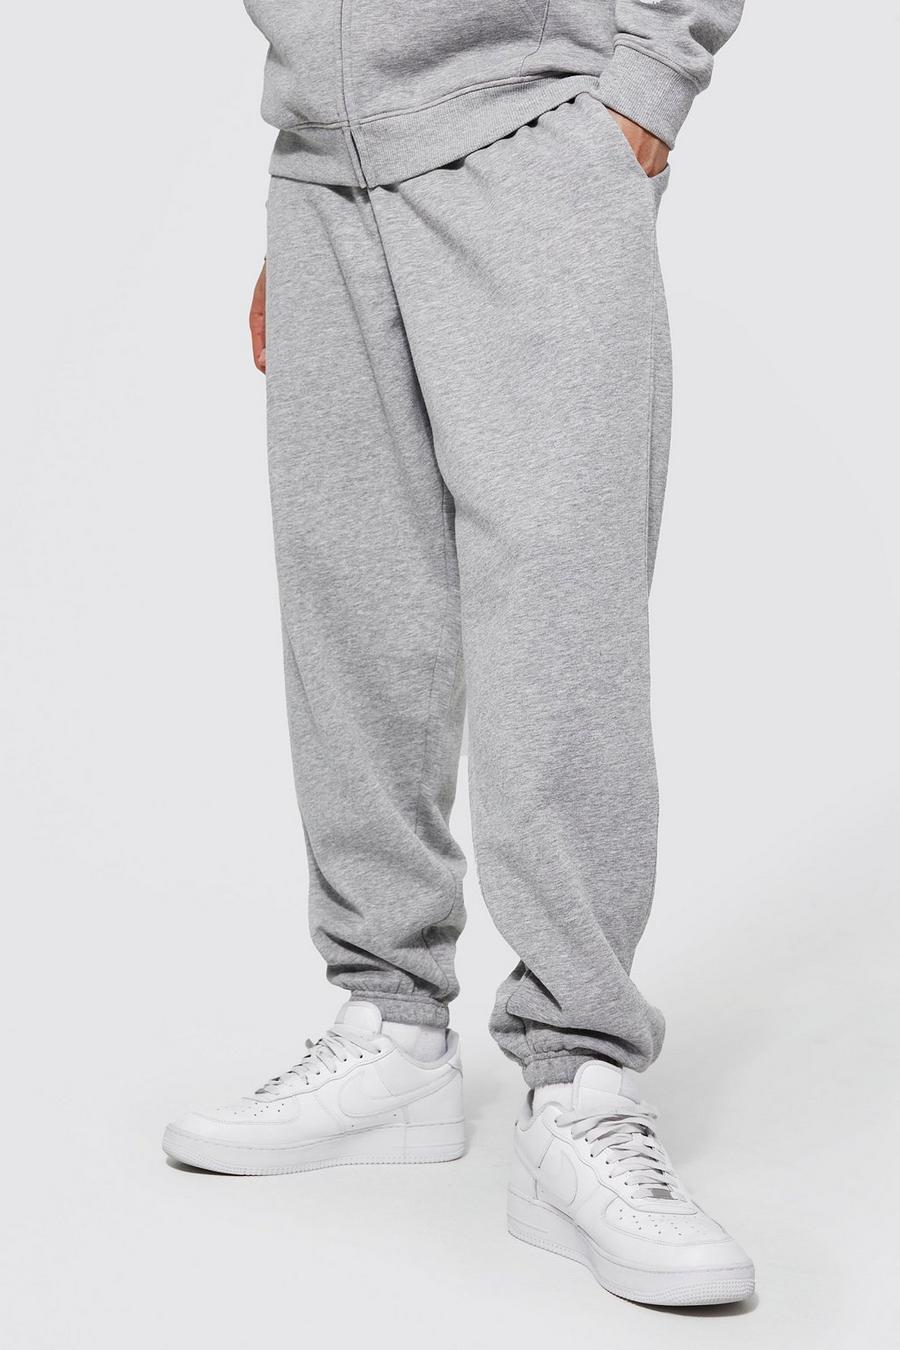 Pantaloni tuta Tall Basic comodi in cotone REEL, Grey marl grigio